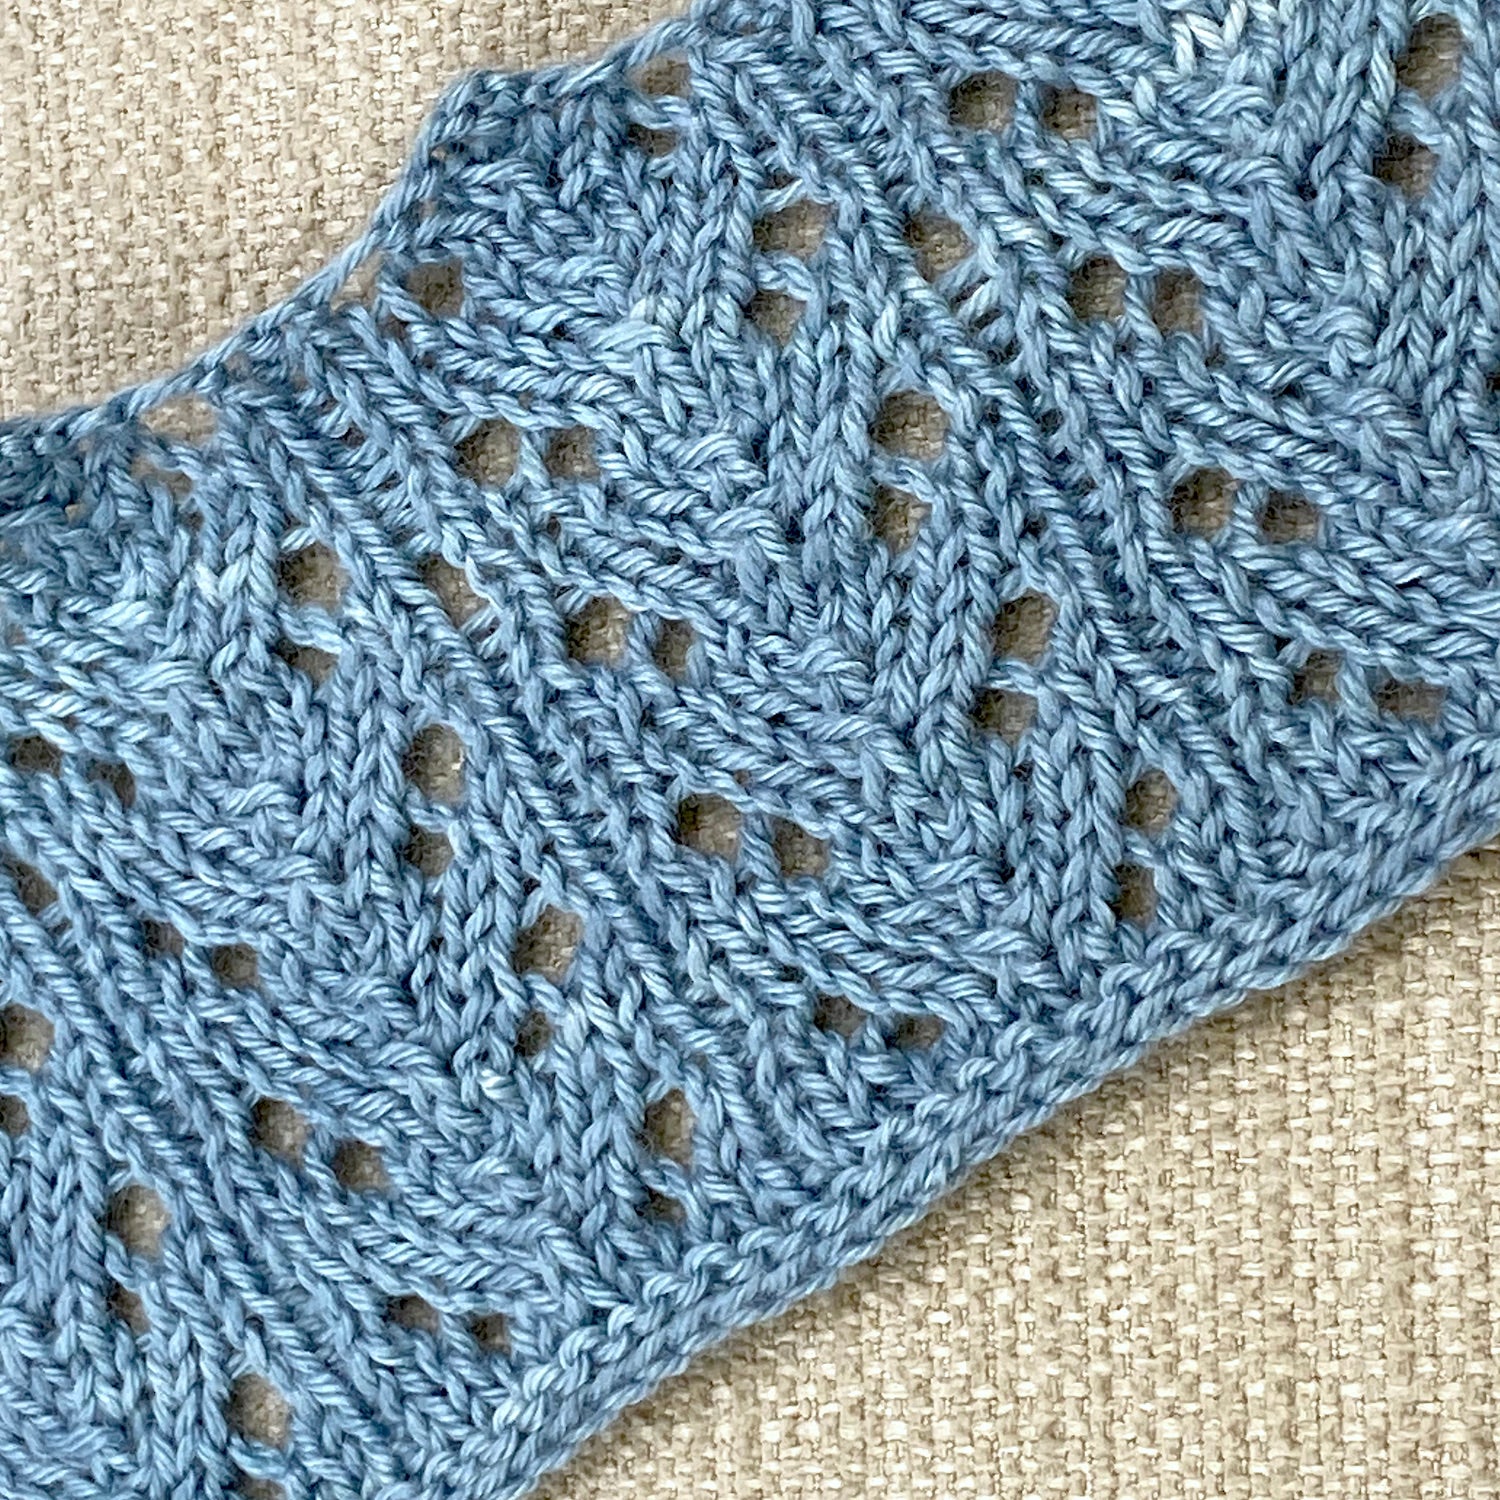 Lace Design Cowl Knitting Kit